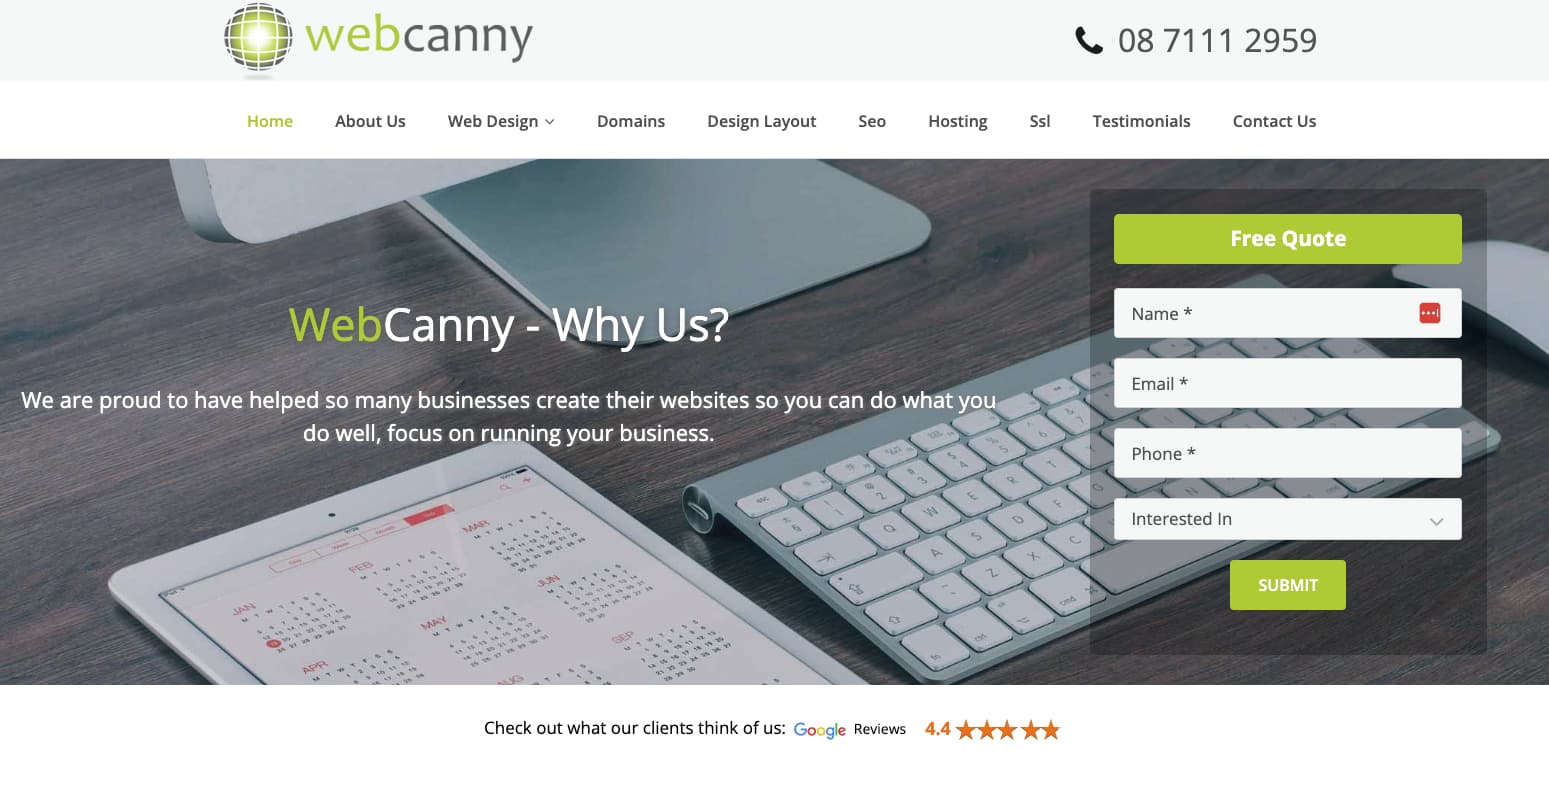 WebCanny